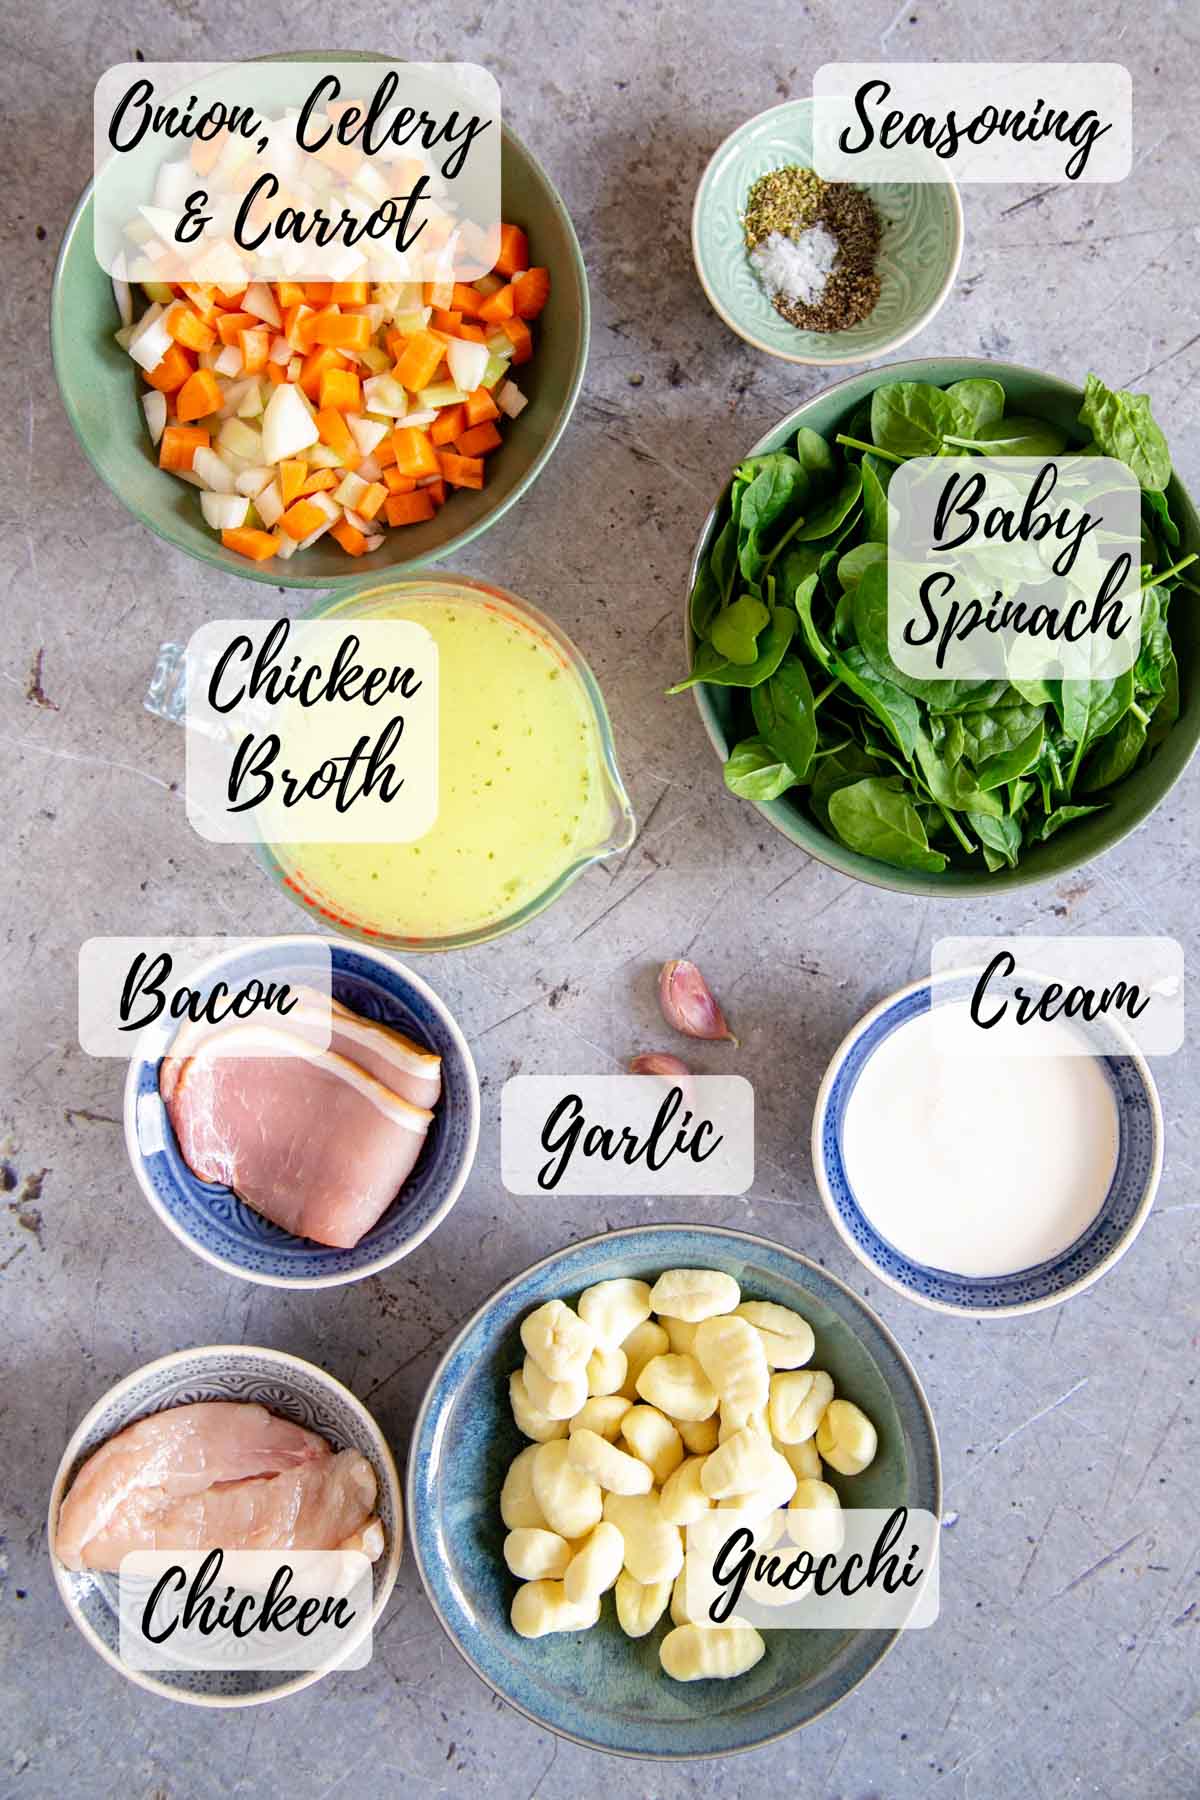 The ingredients: soffrito vegetables, seasoning, baby spinach, garlic, cream, gnocchi, chicken, bacon, and chicken broth.